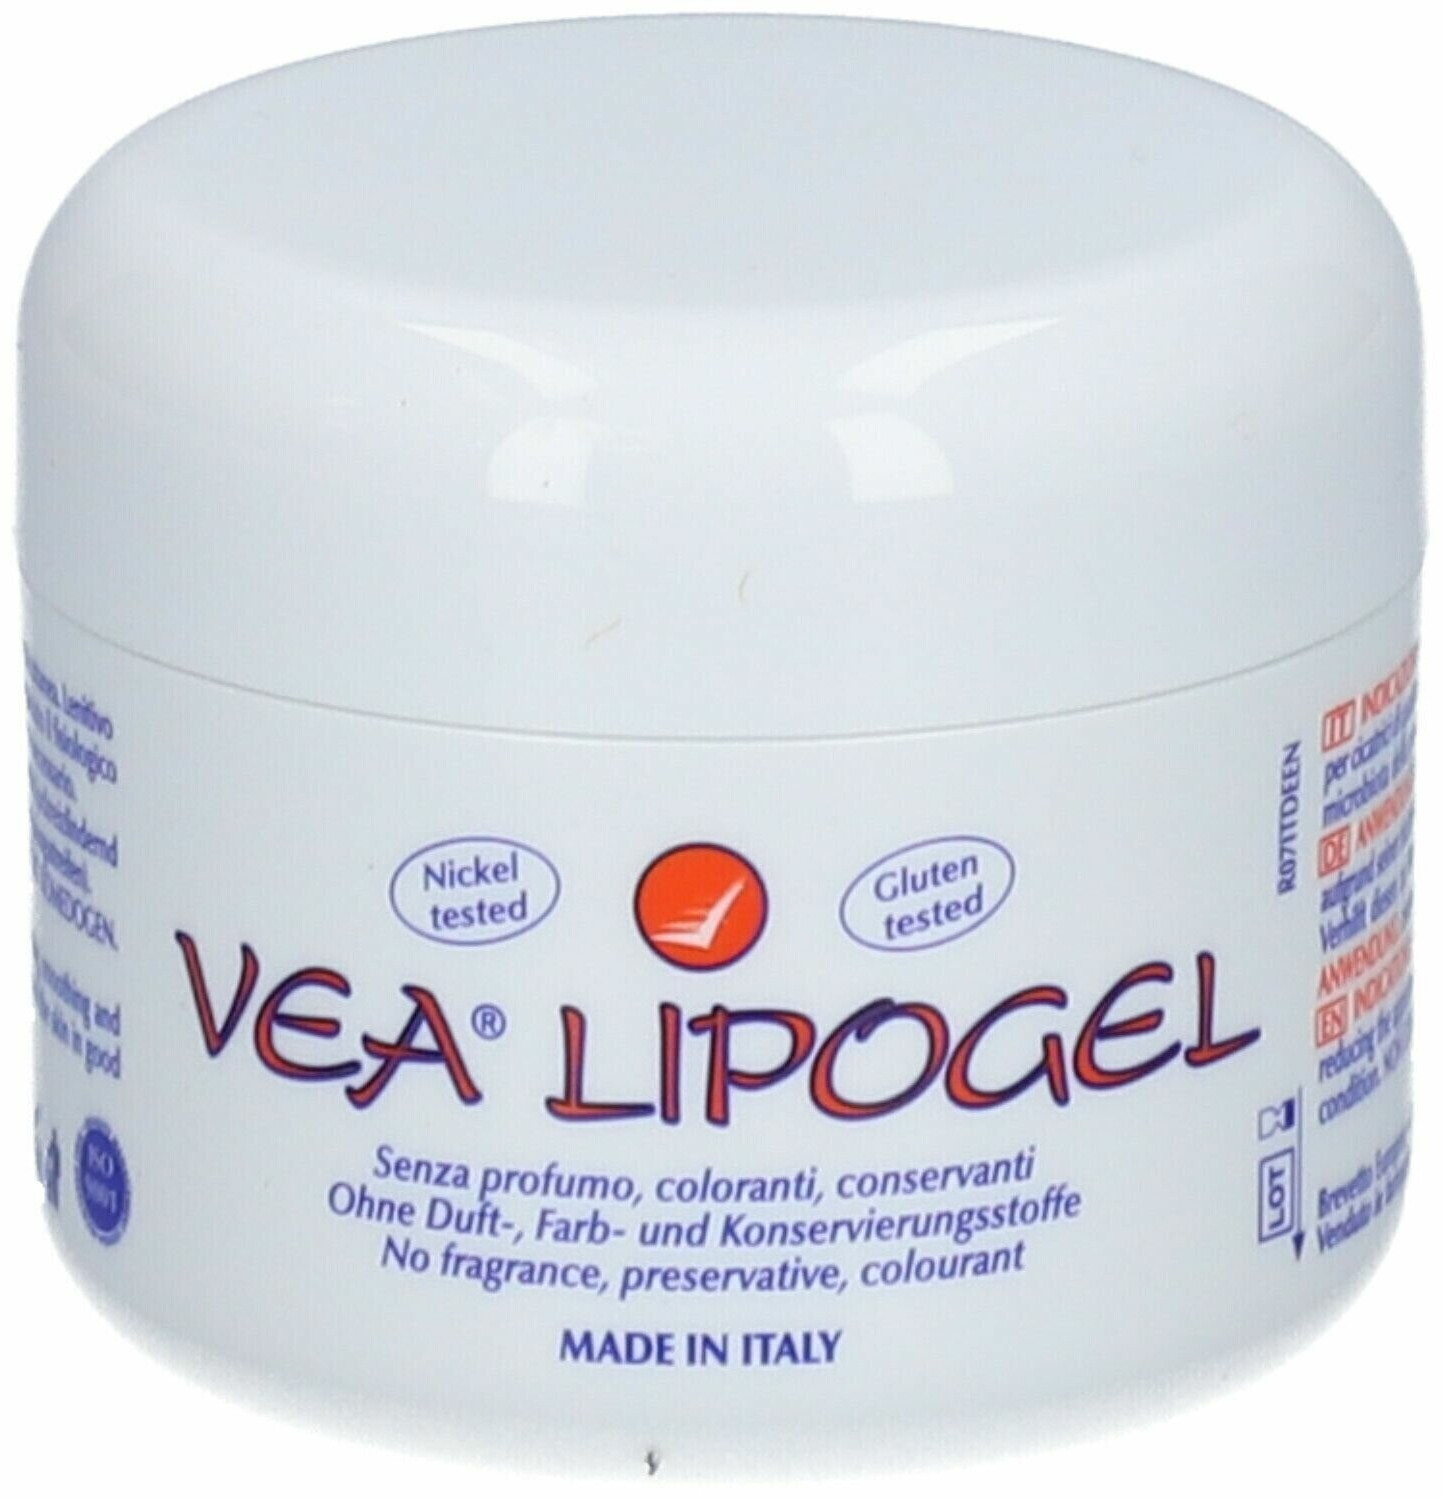 Comprar Vea Lipogel Vitamina E Gel 50 ml online.